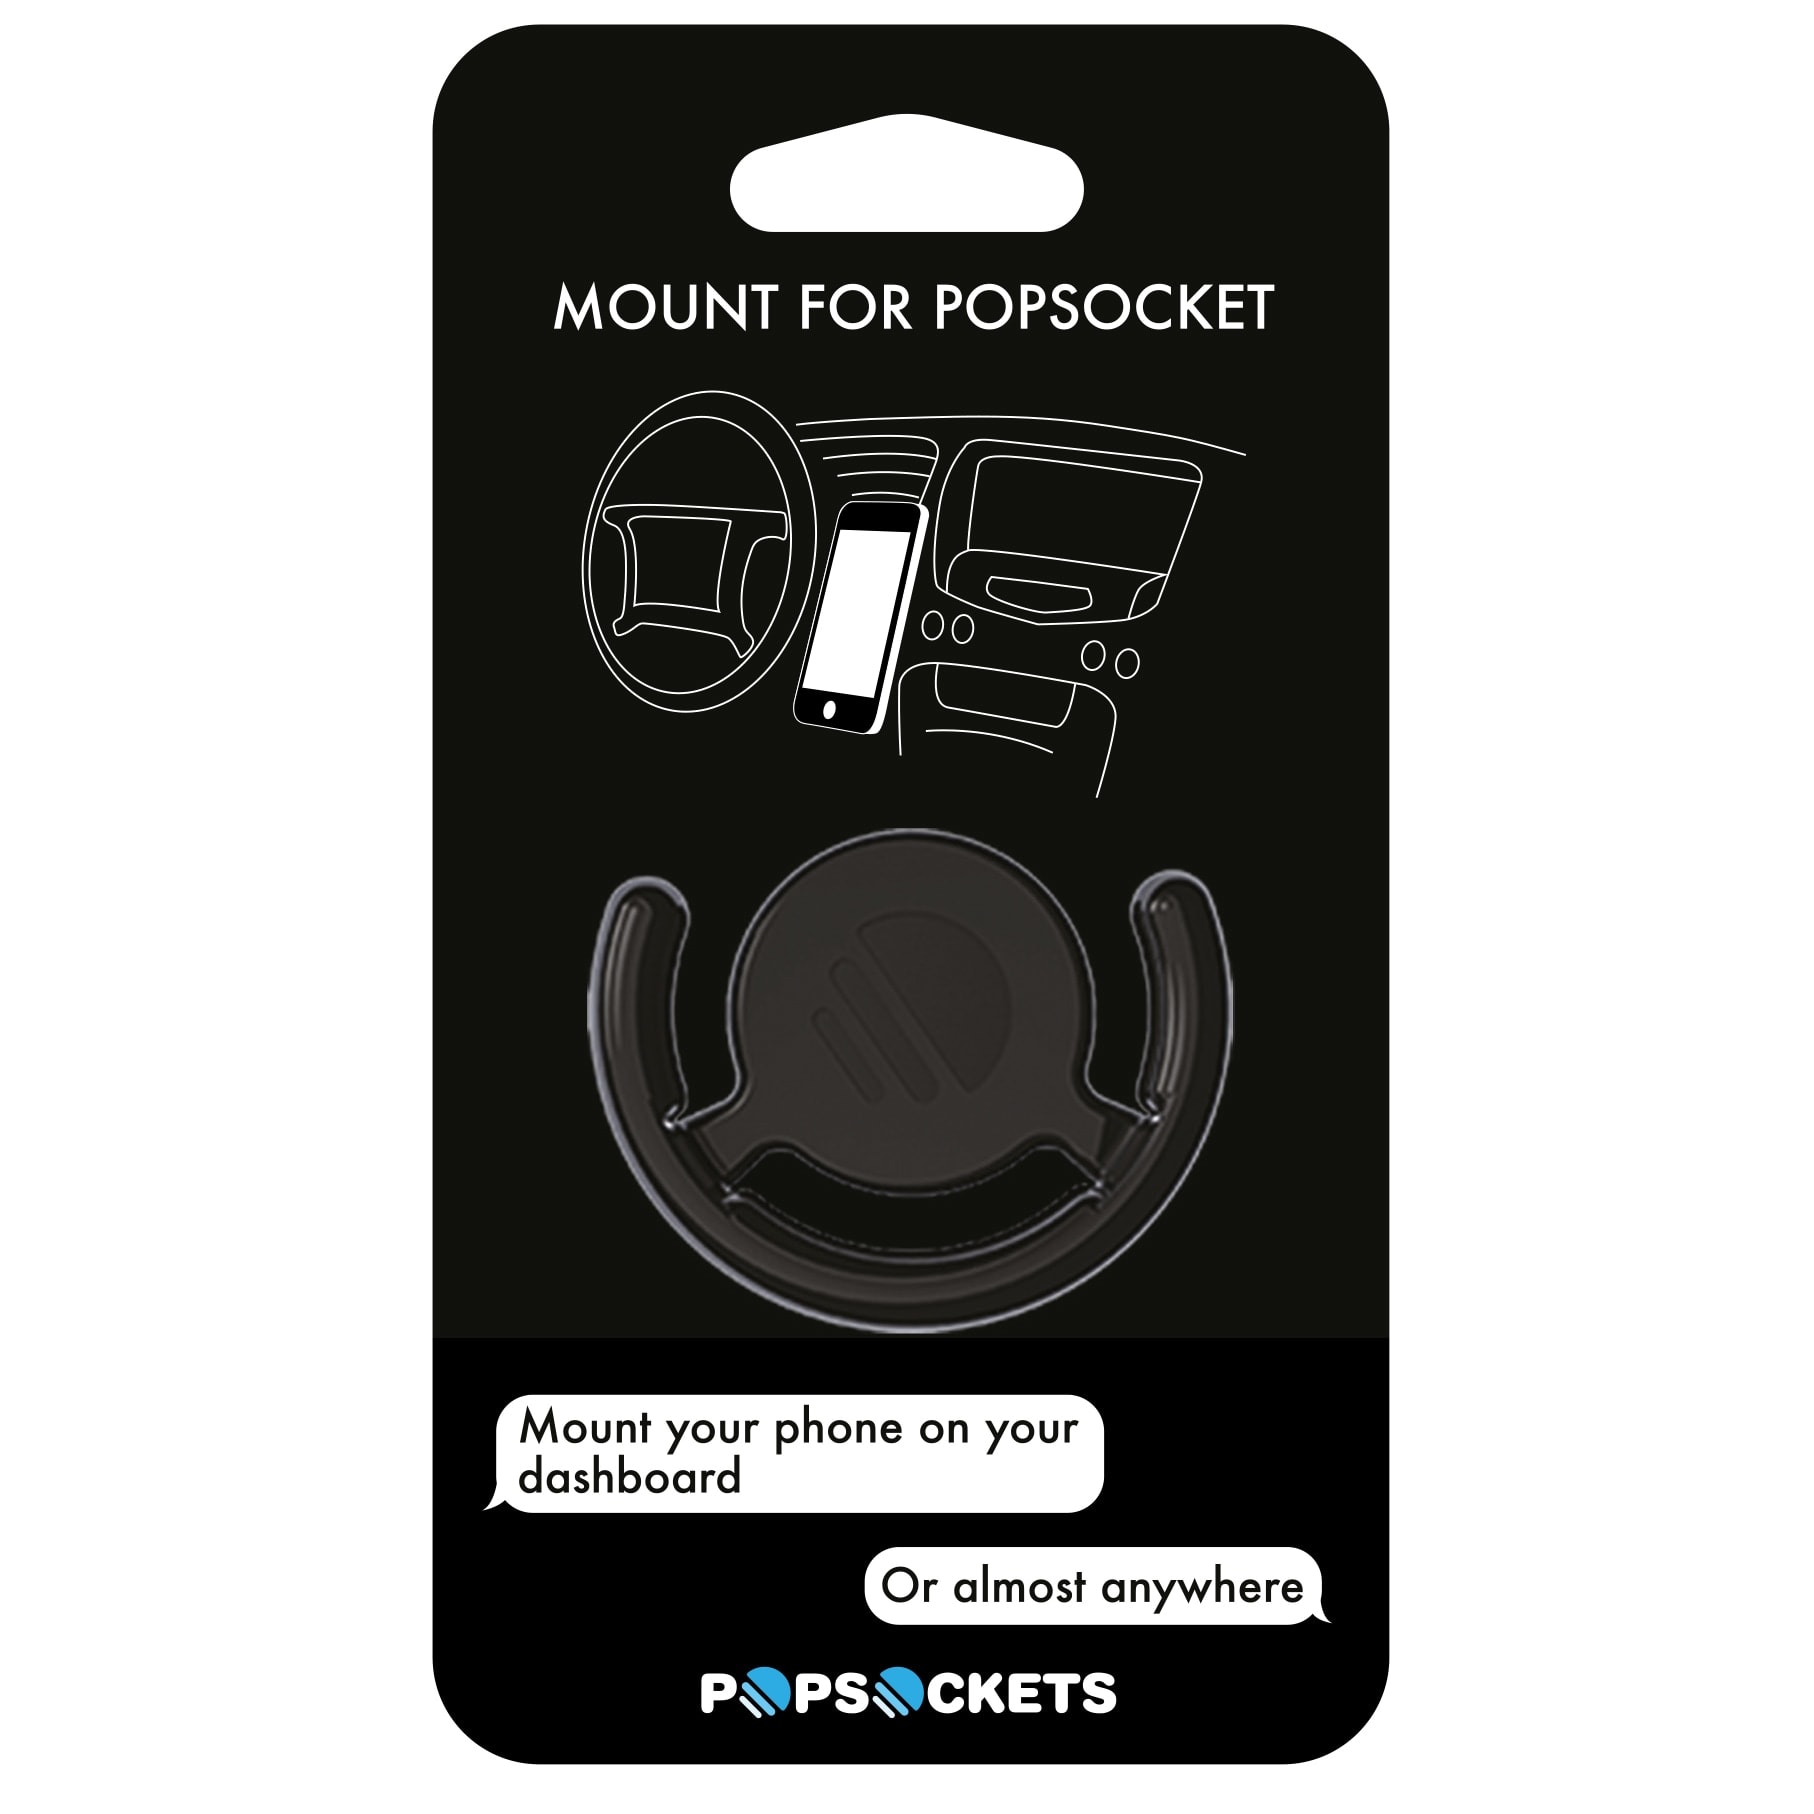 popsockets popclip mount